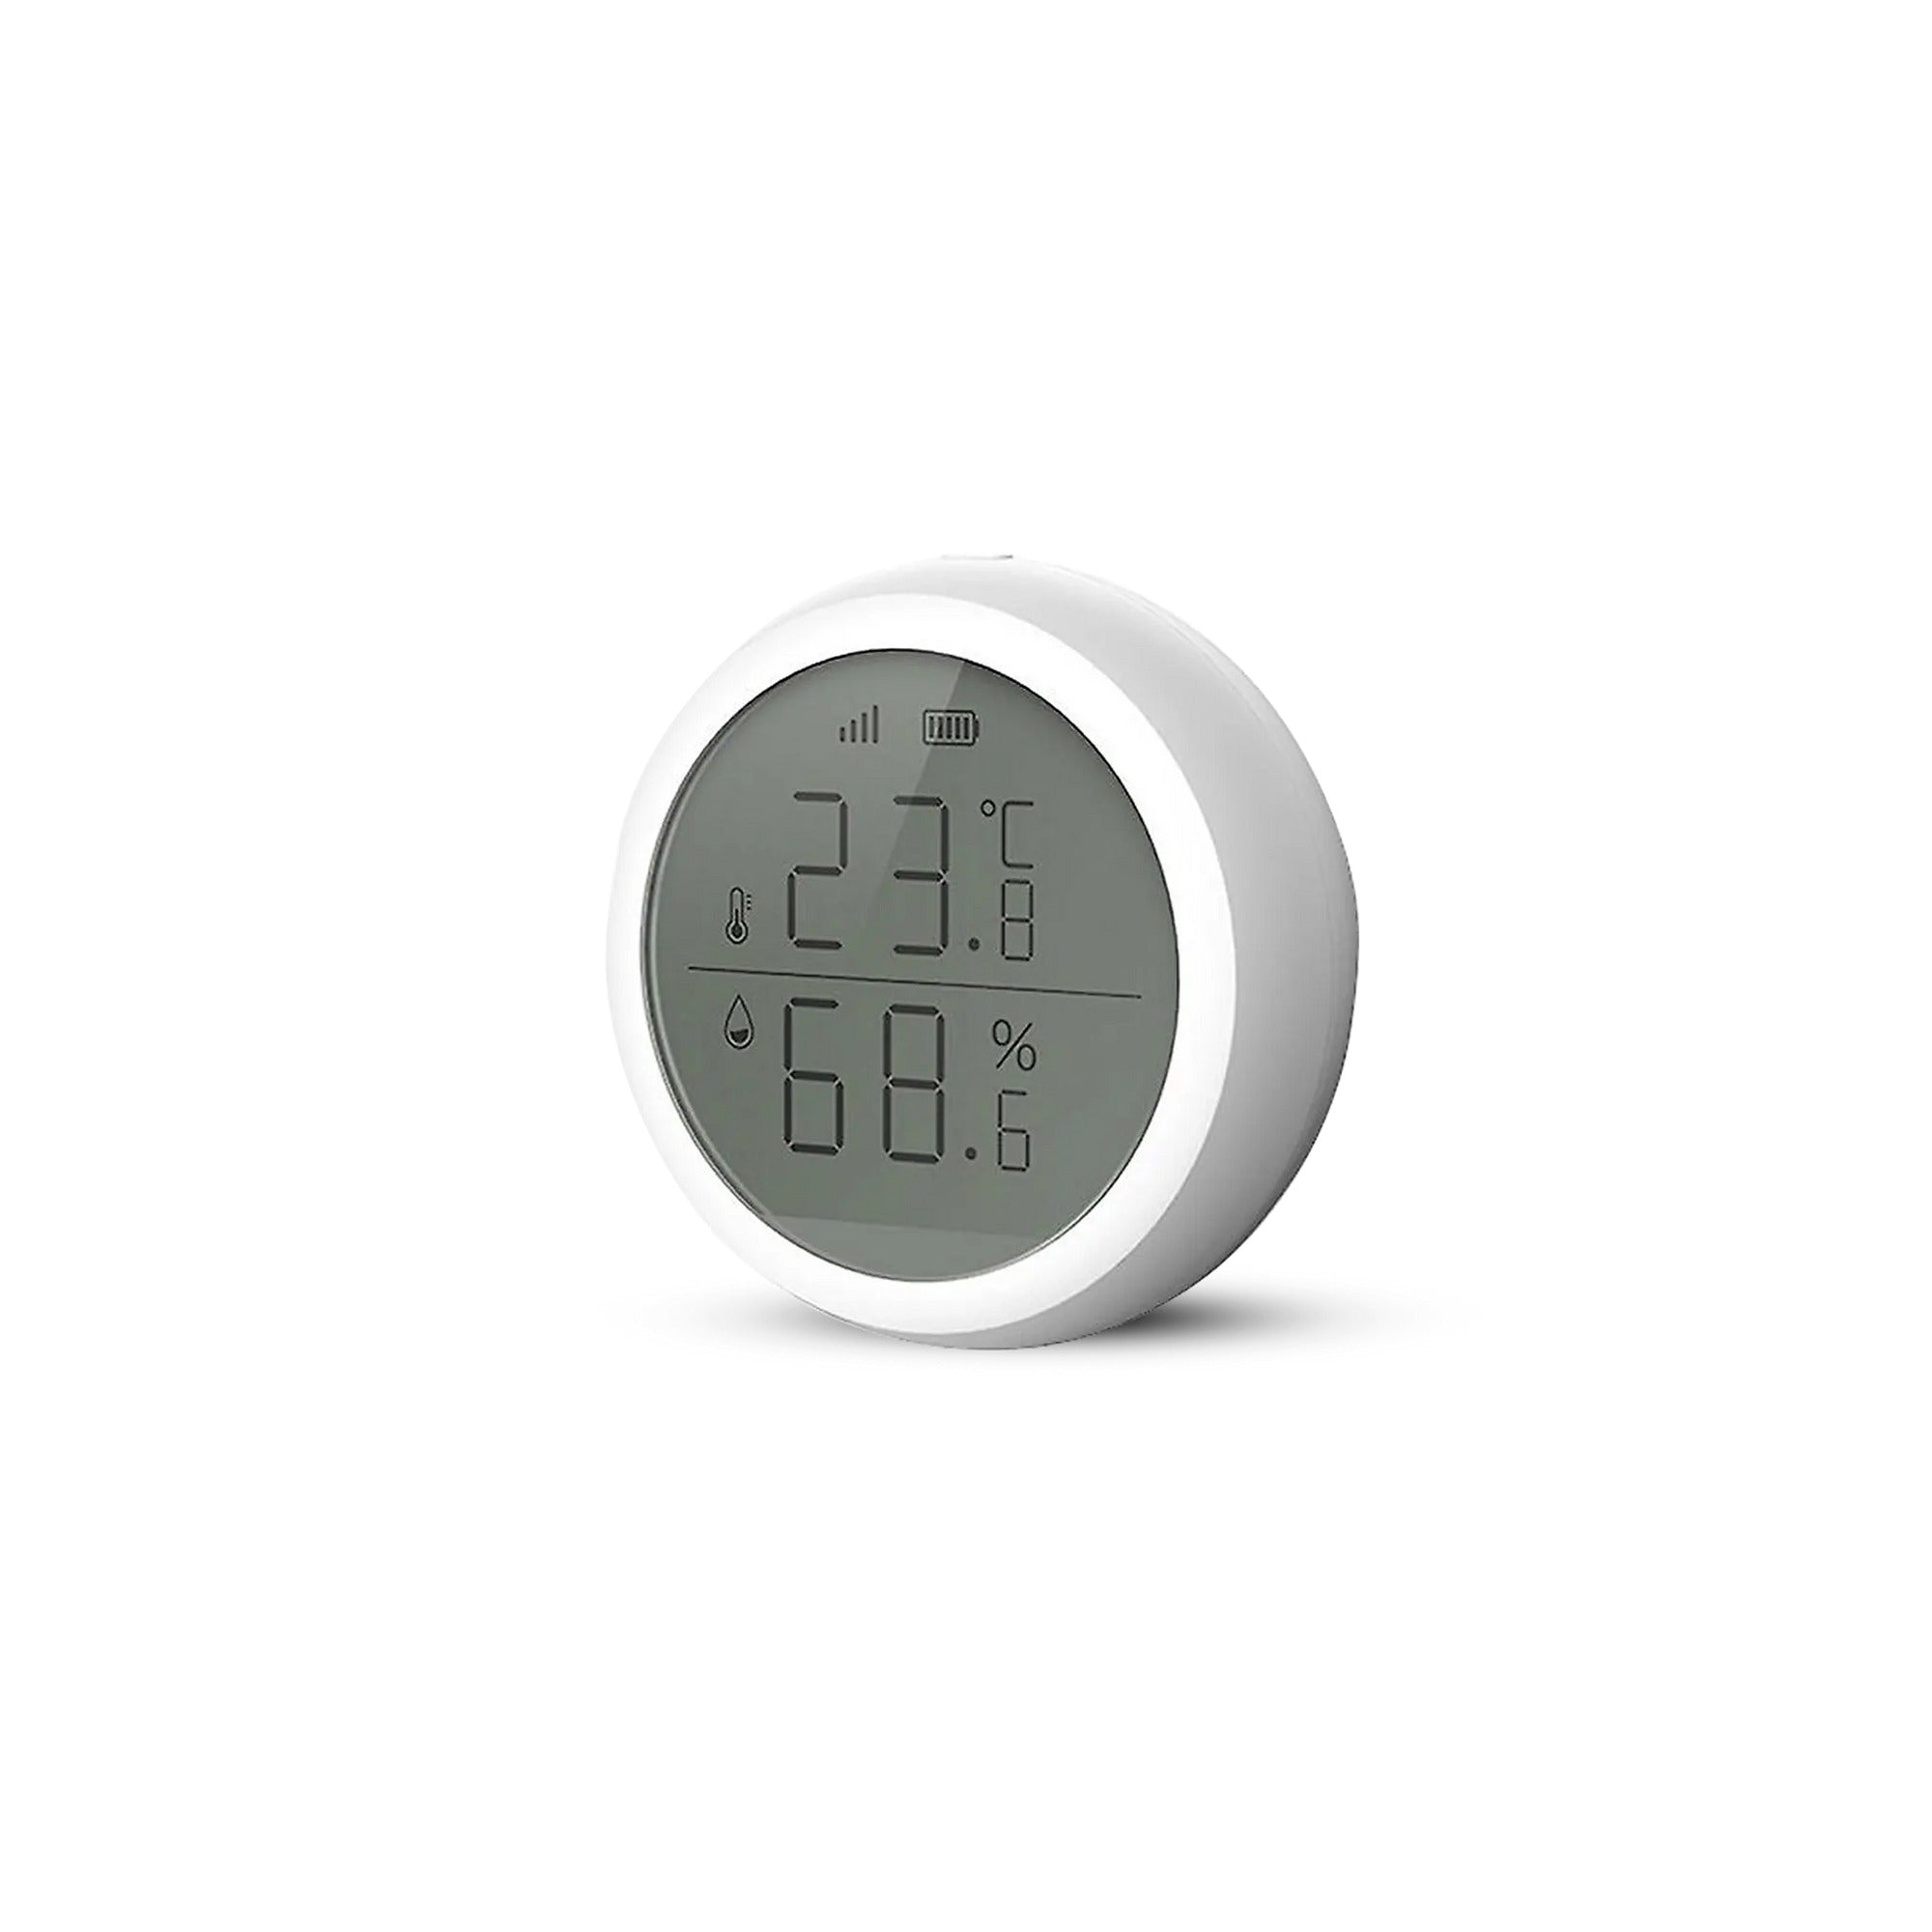 Okasha Temperature & Humidity Sensor White Color Price in Pakistan